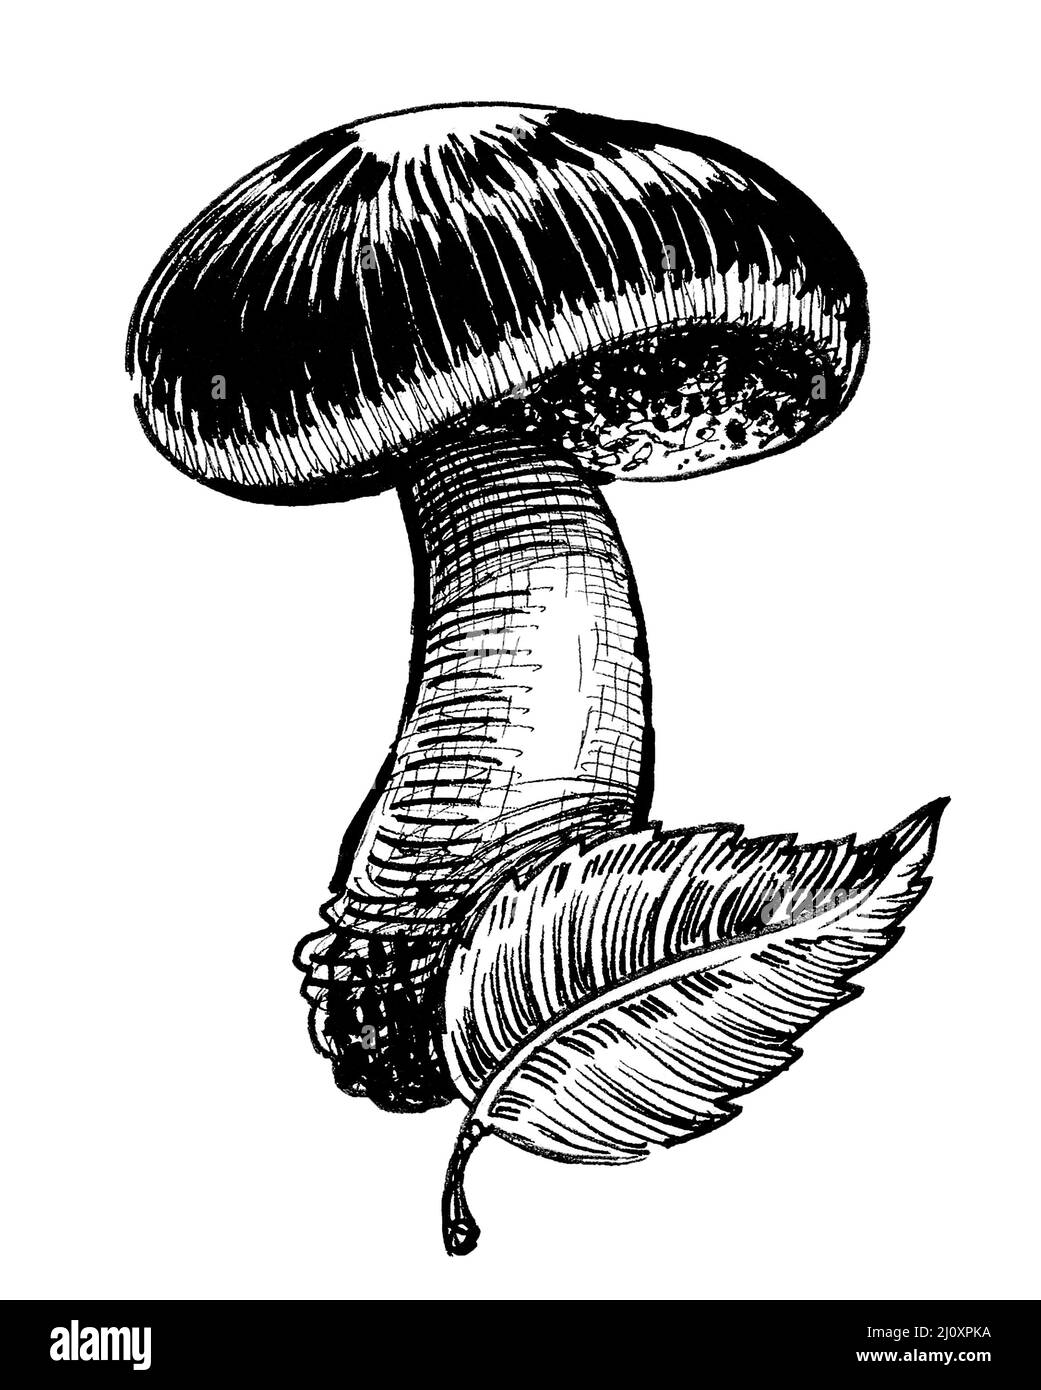 Mushroom ink Black and White Stock Photos & Images - Alamy